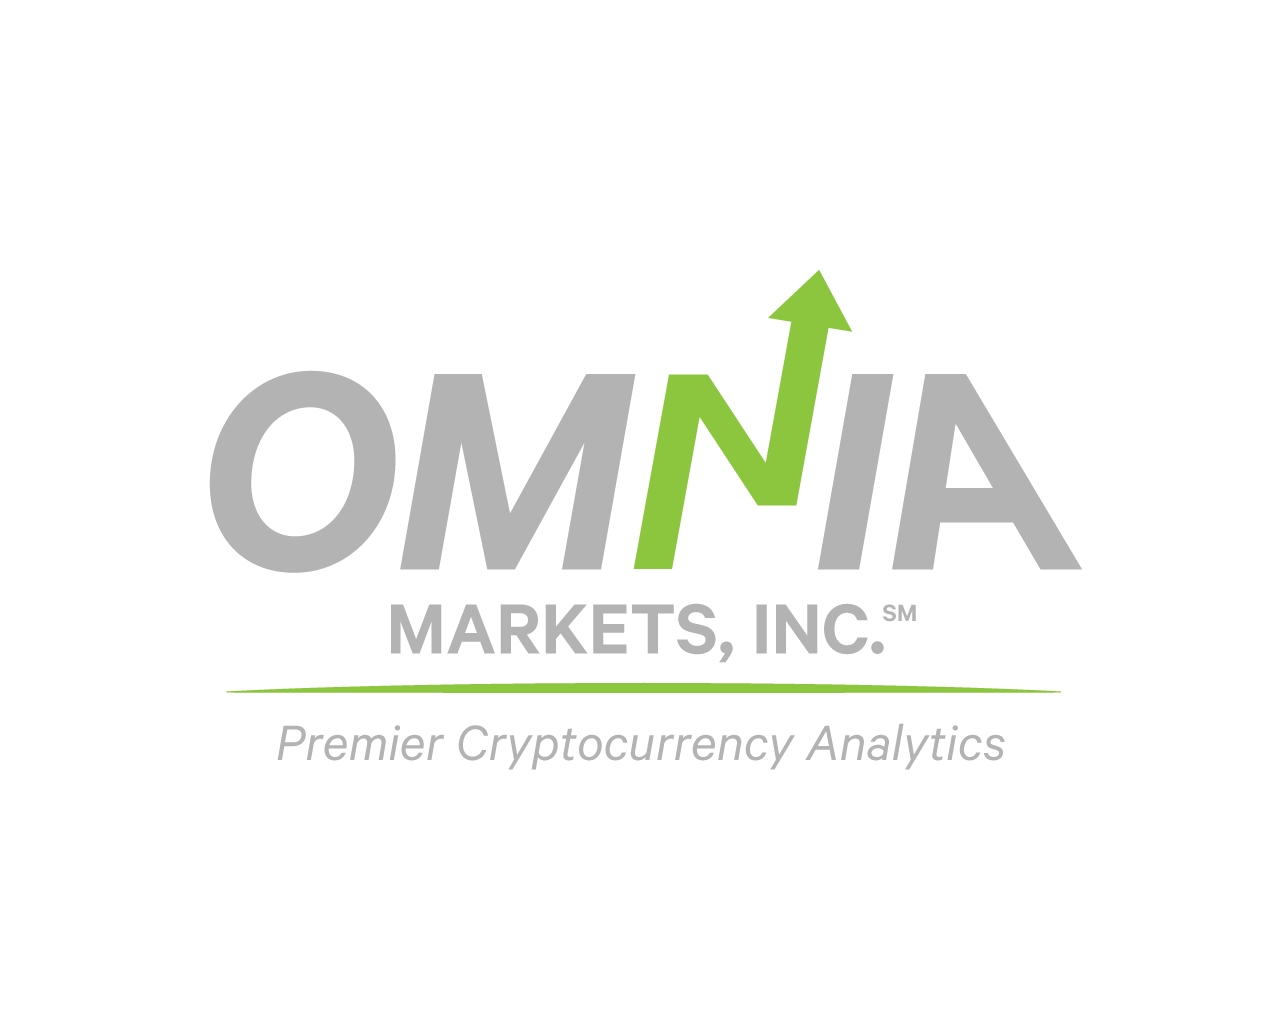 Winner Image - Omnia Markets, Inc.